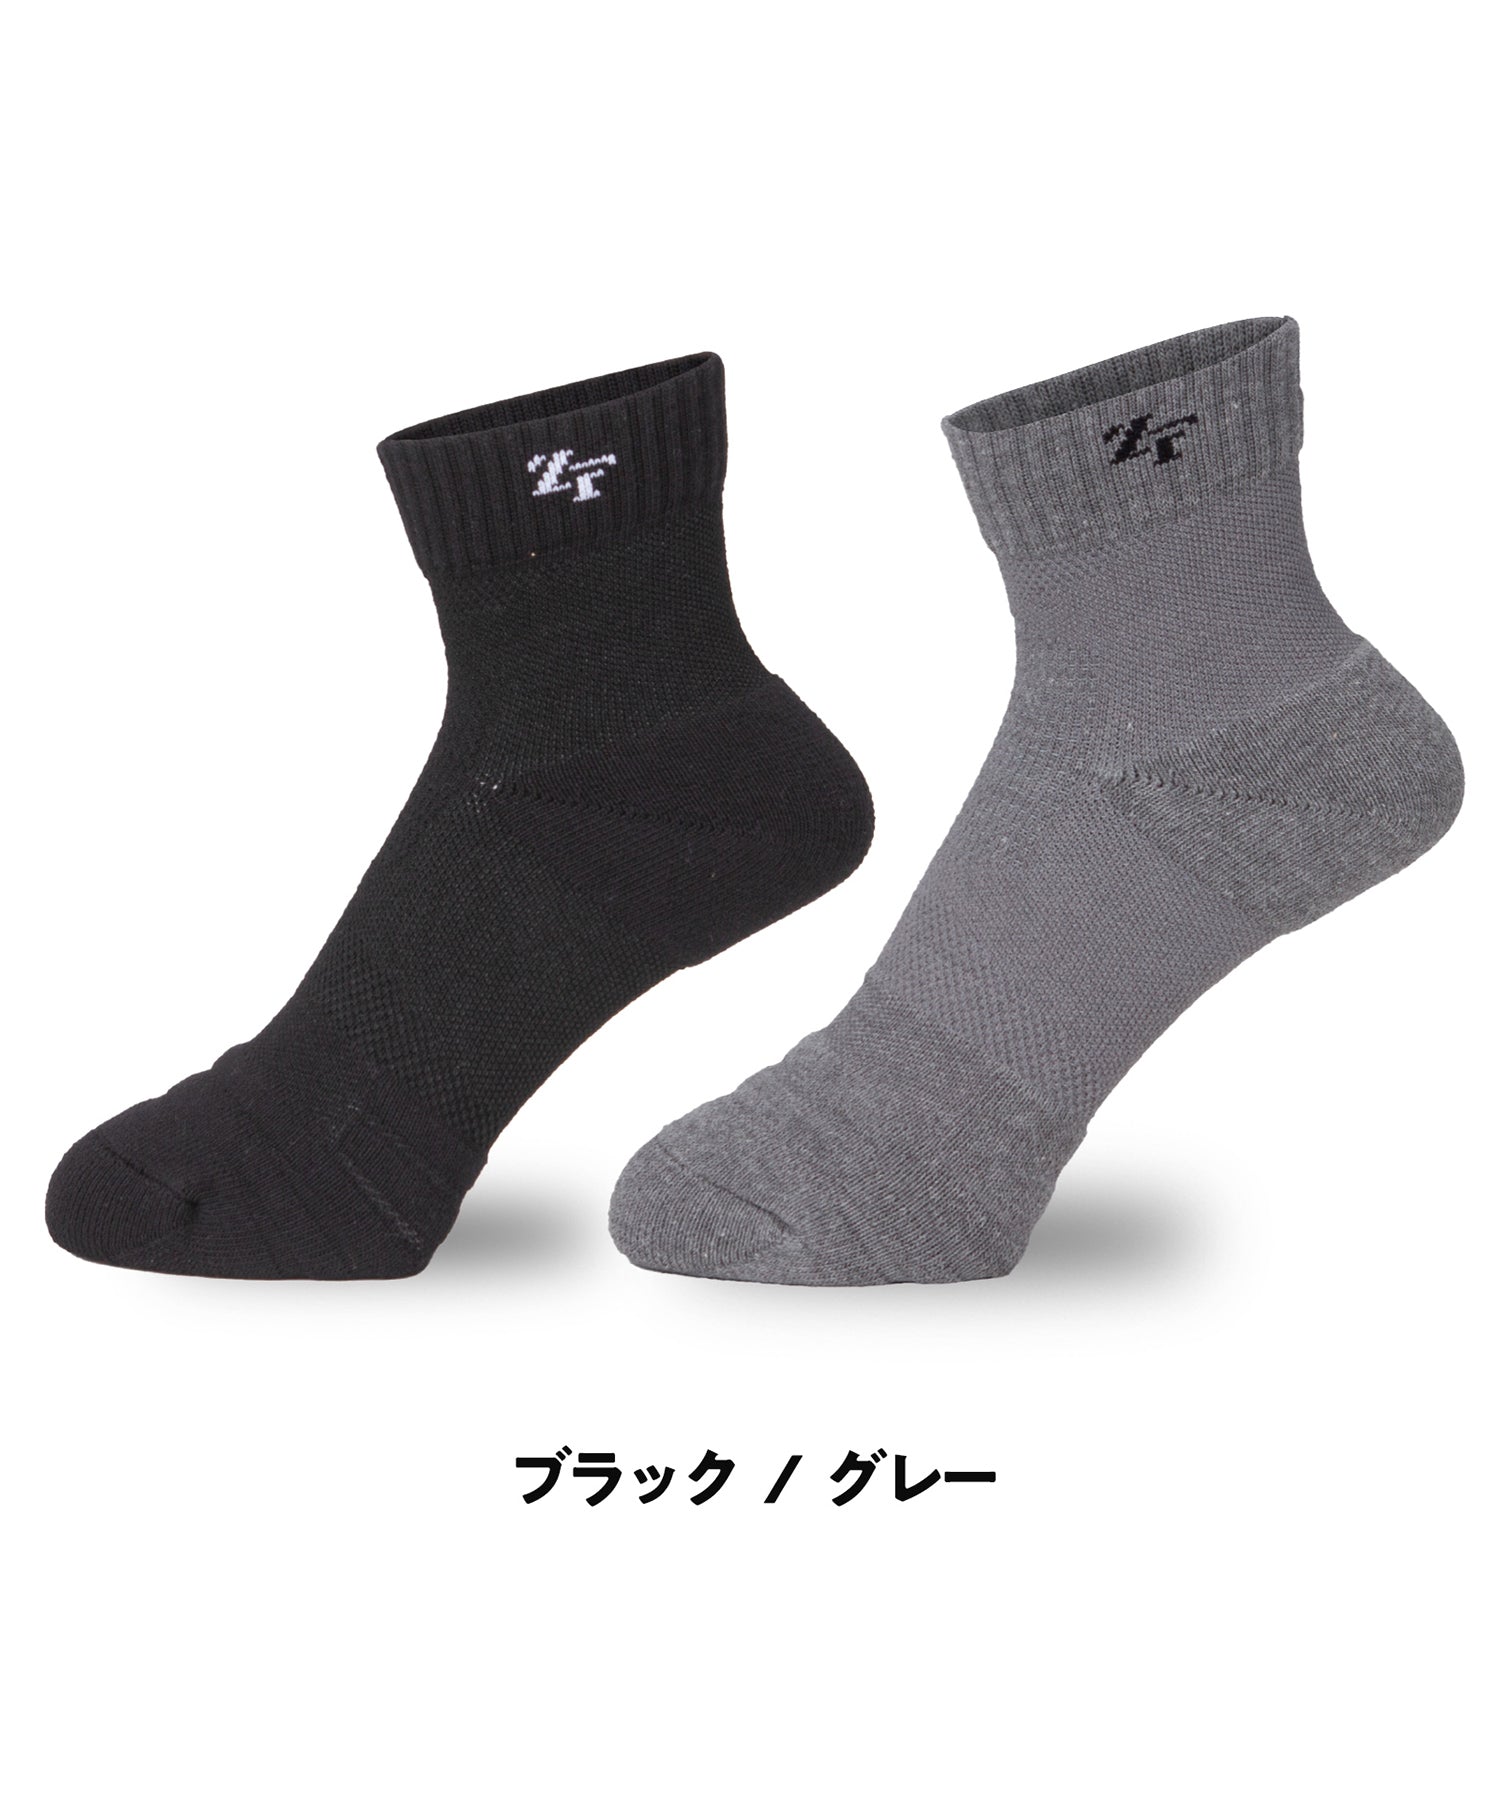 Cross socks, half-middle